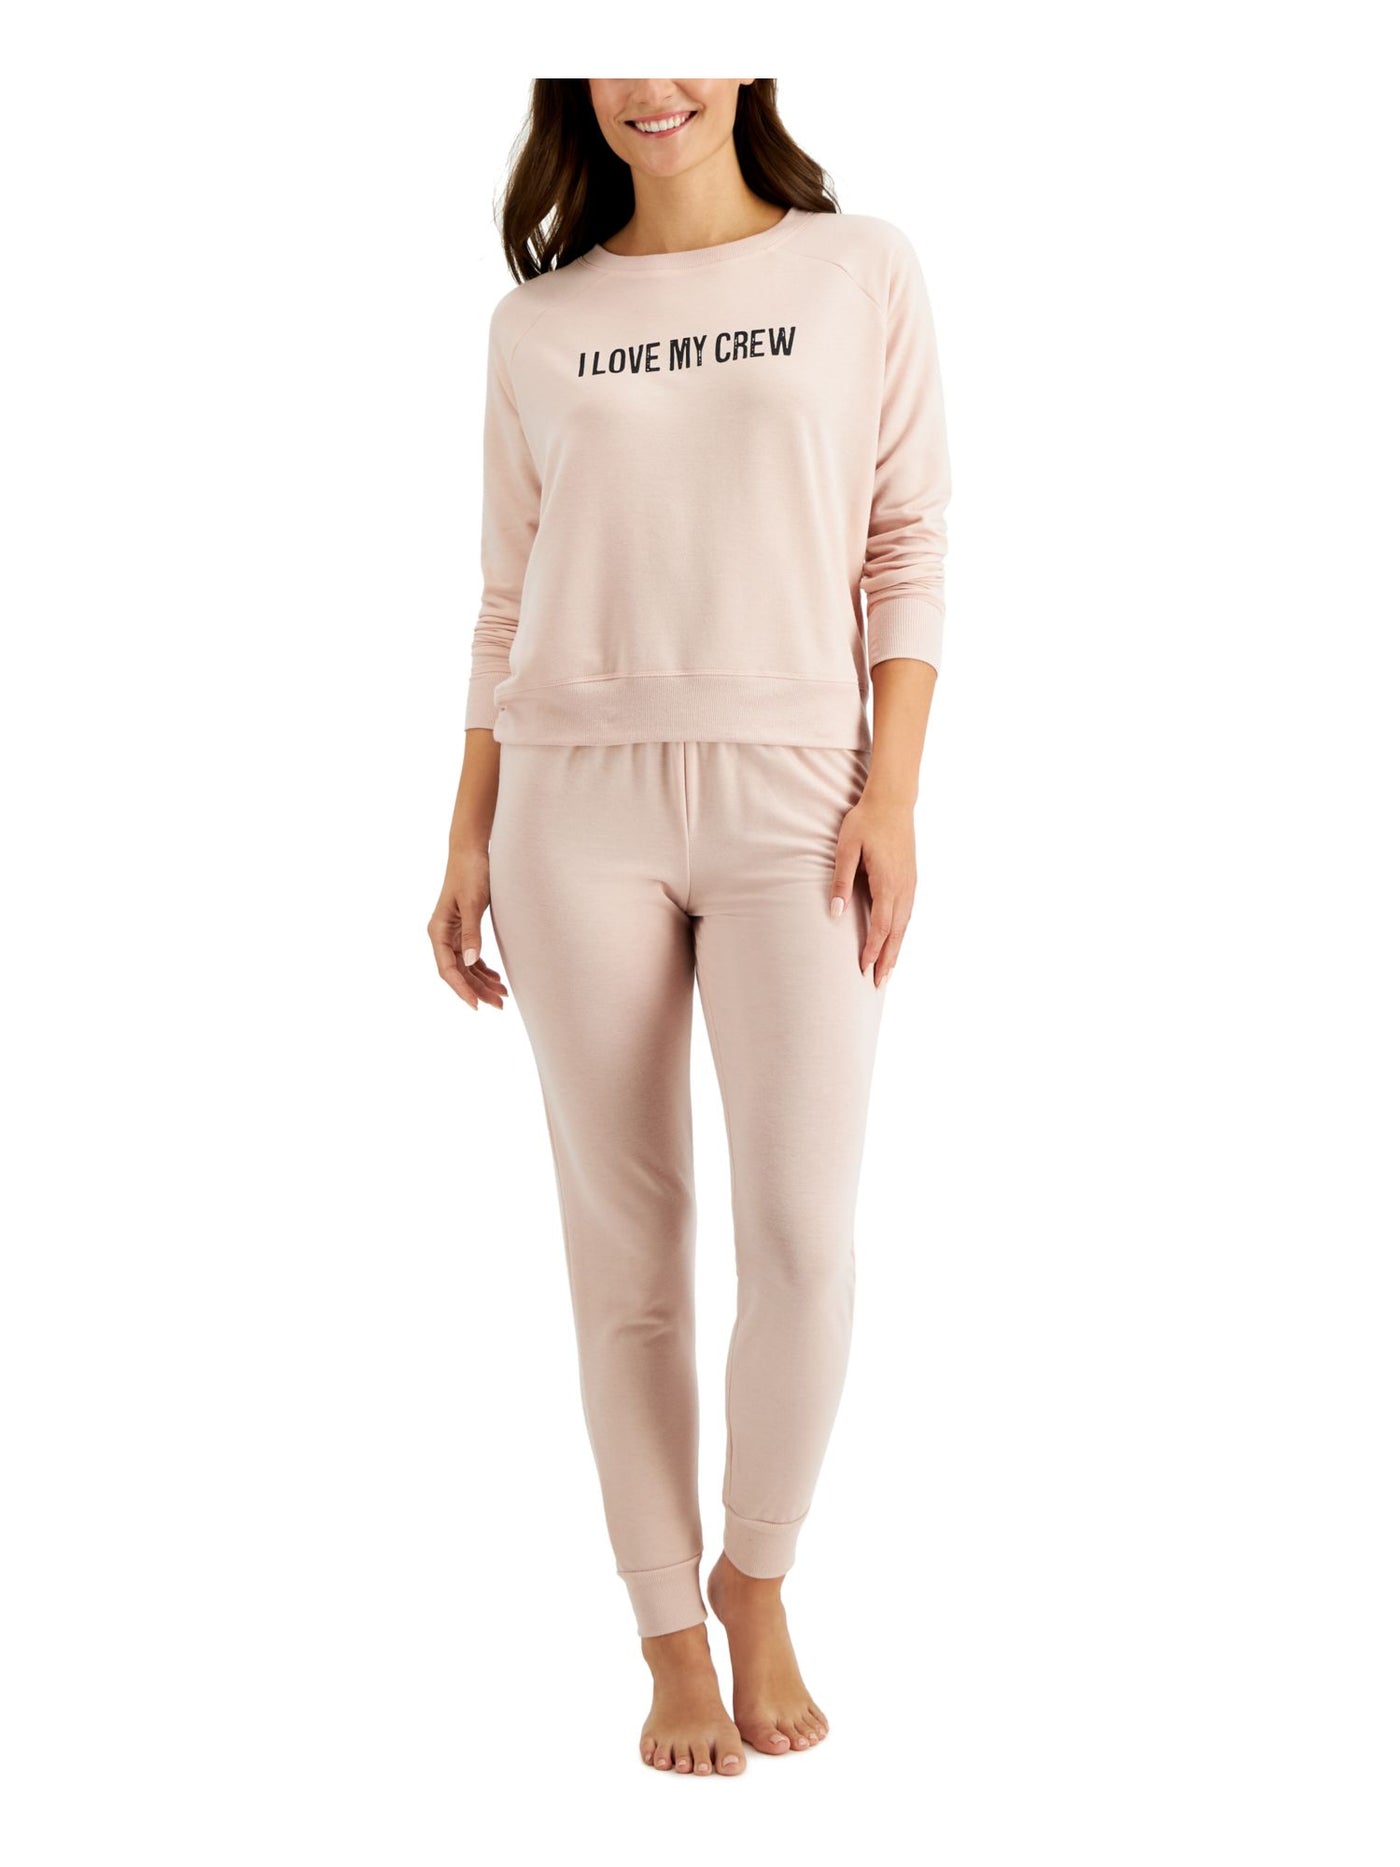 FAMILY PJs Womens Pink Printed Top Long Sleeve Lounge Pants Stretch Pajamas XS